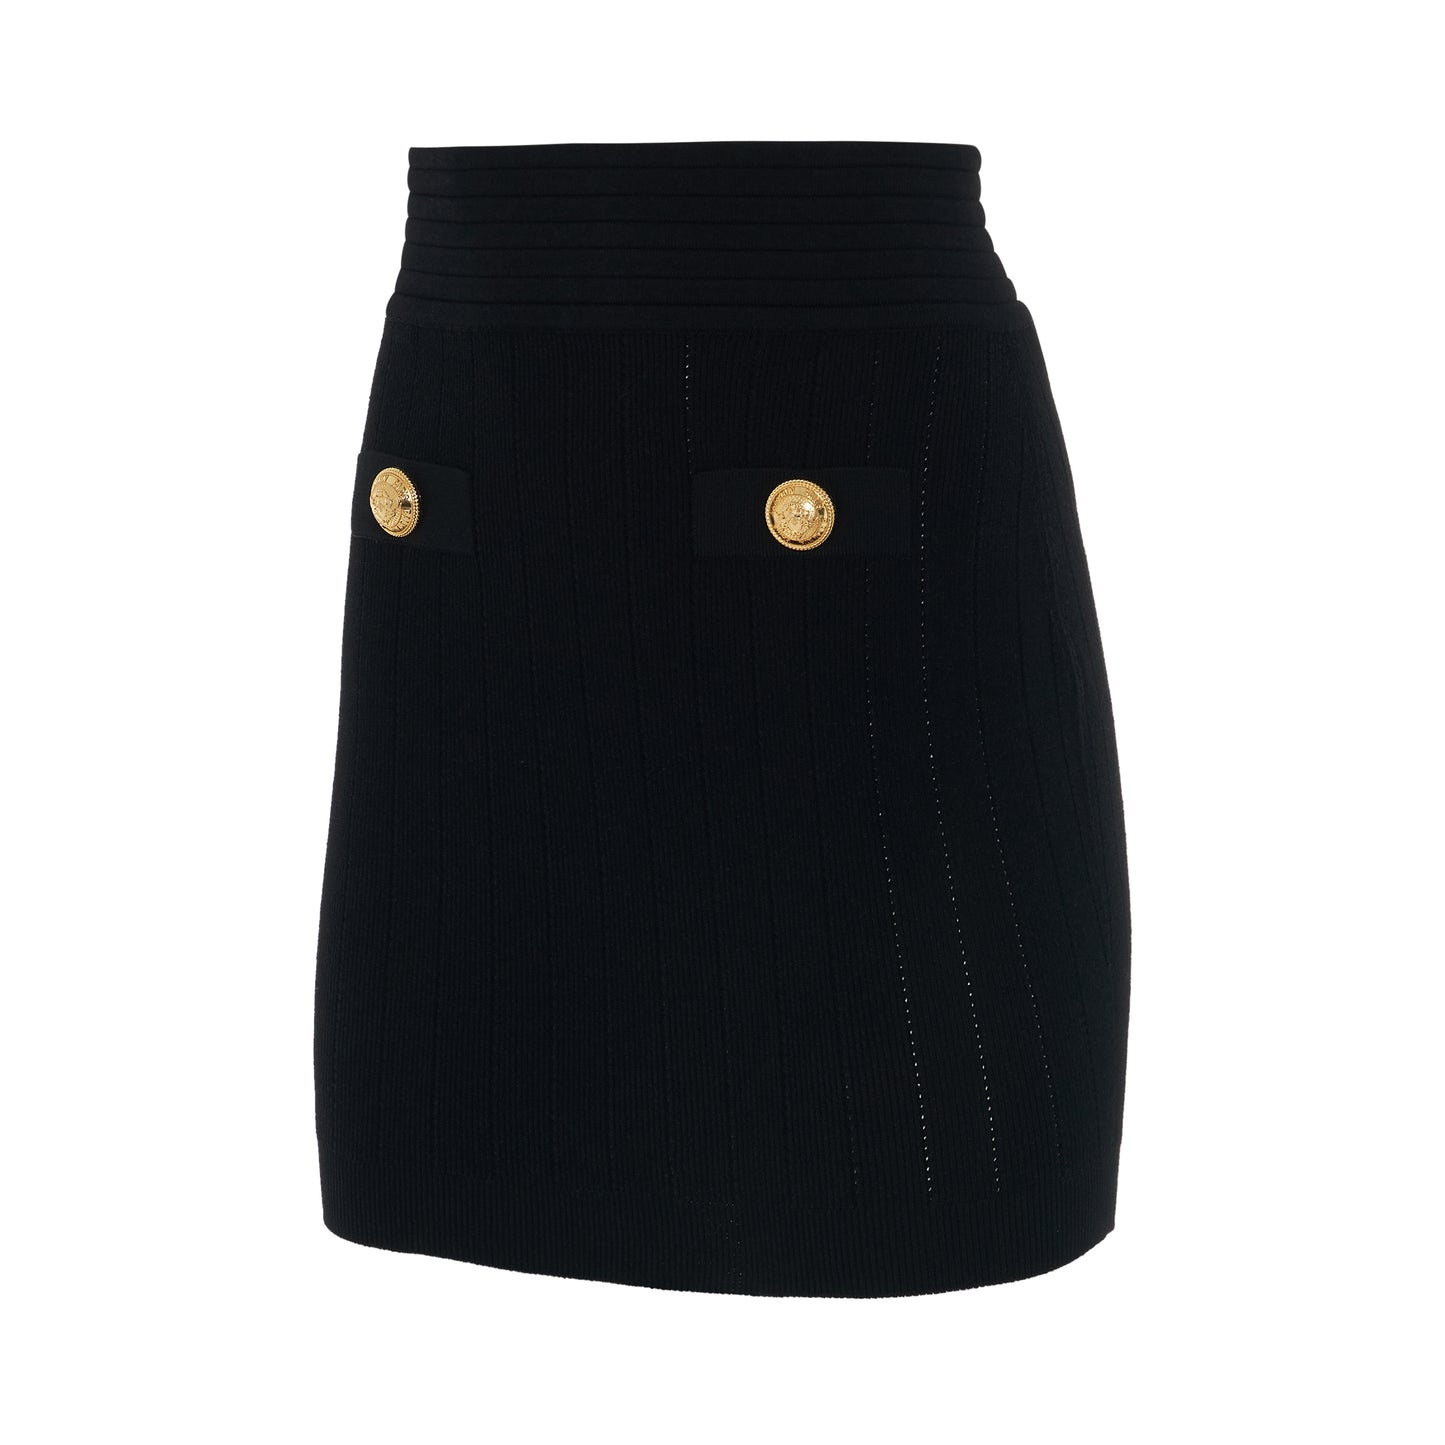 2 Button Short Knitted Skirt in Black